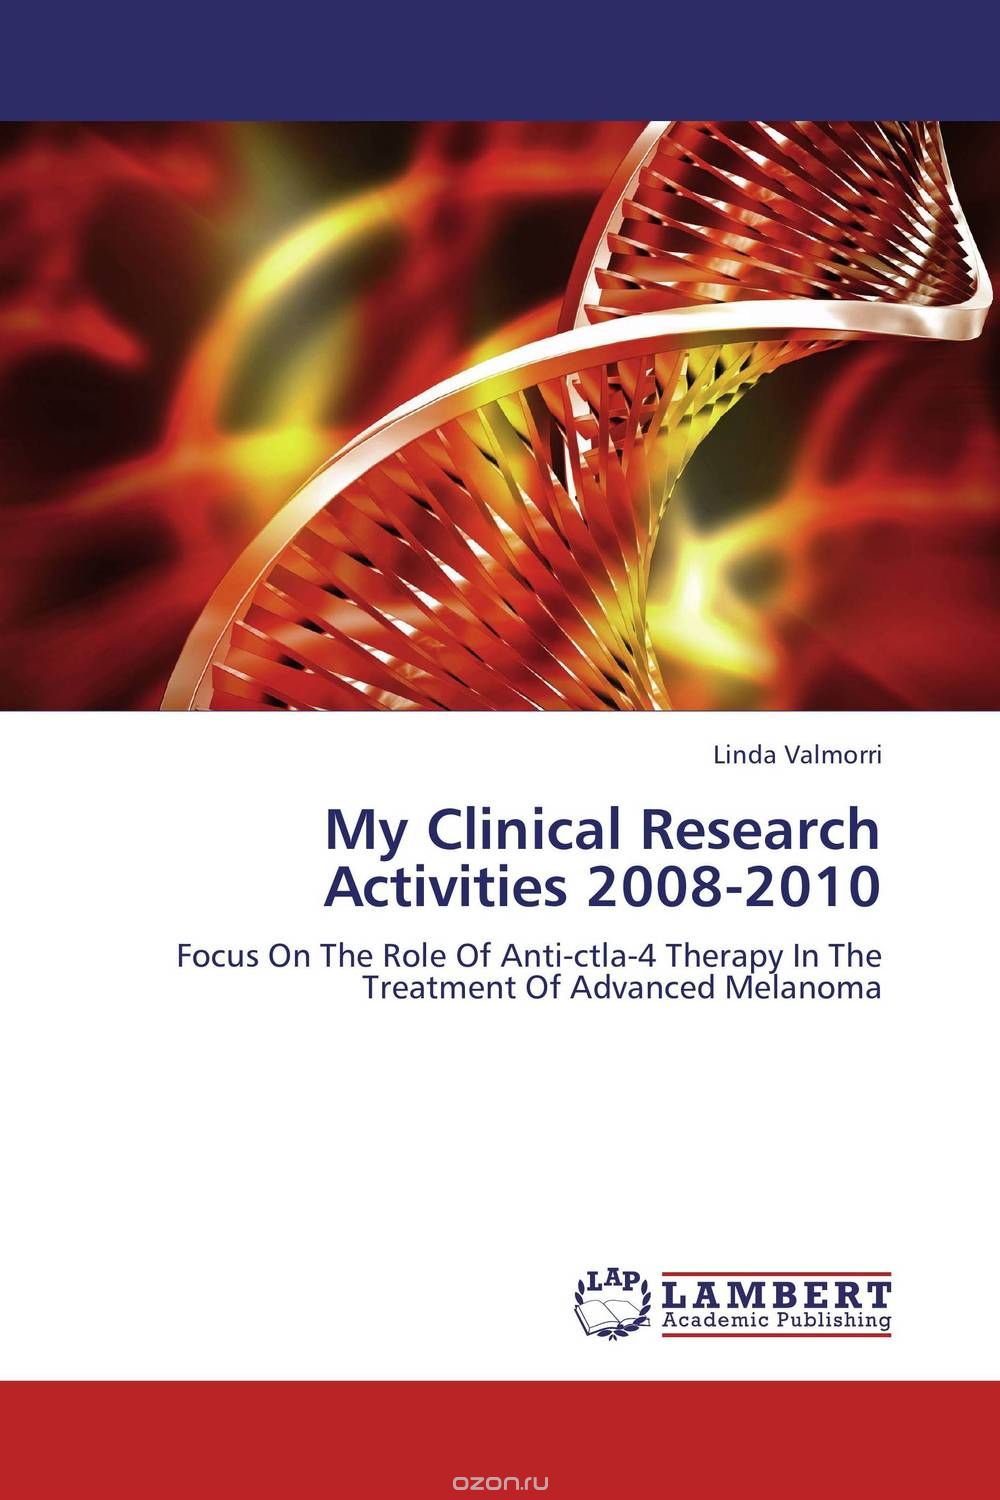 Скачать книгу "My Clinical Research Activities 2008-2010"